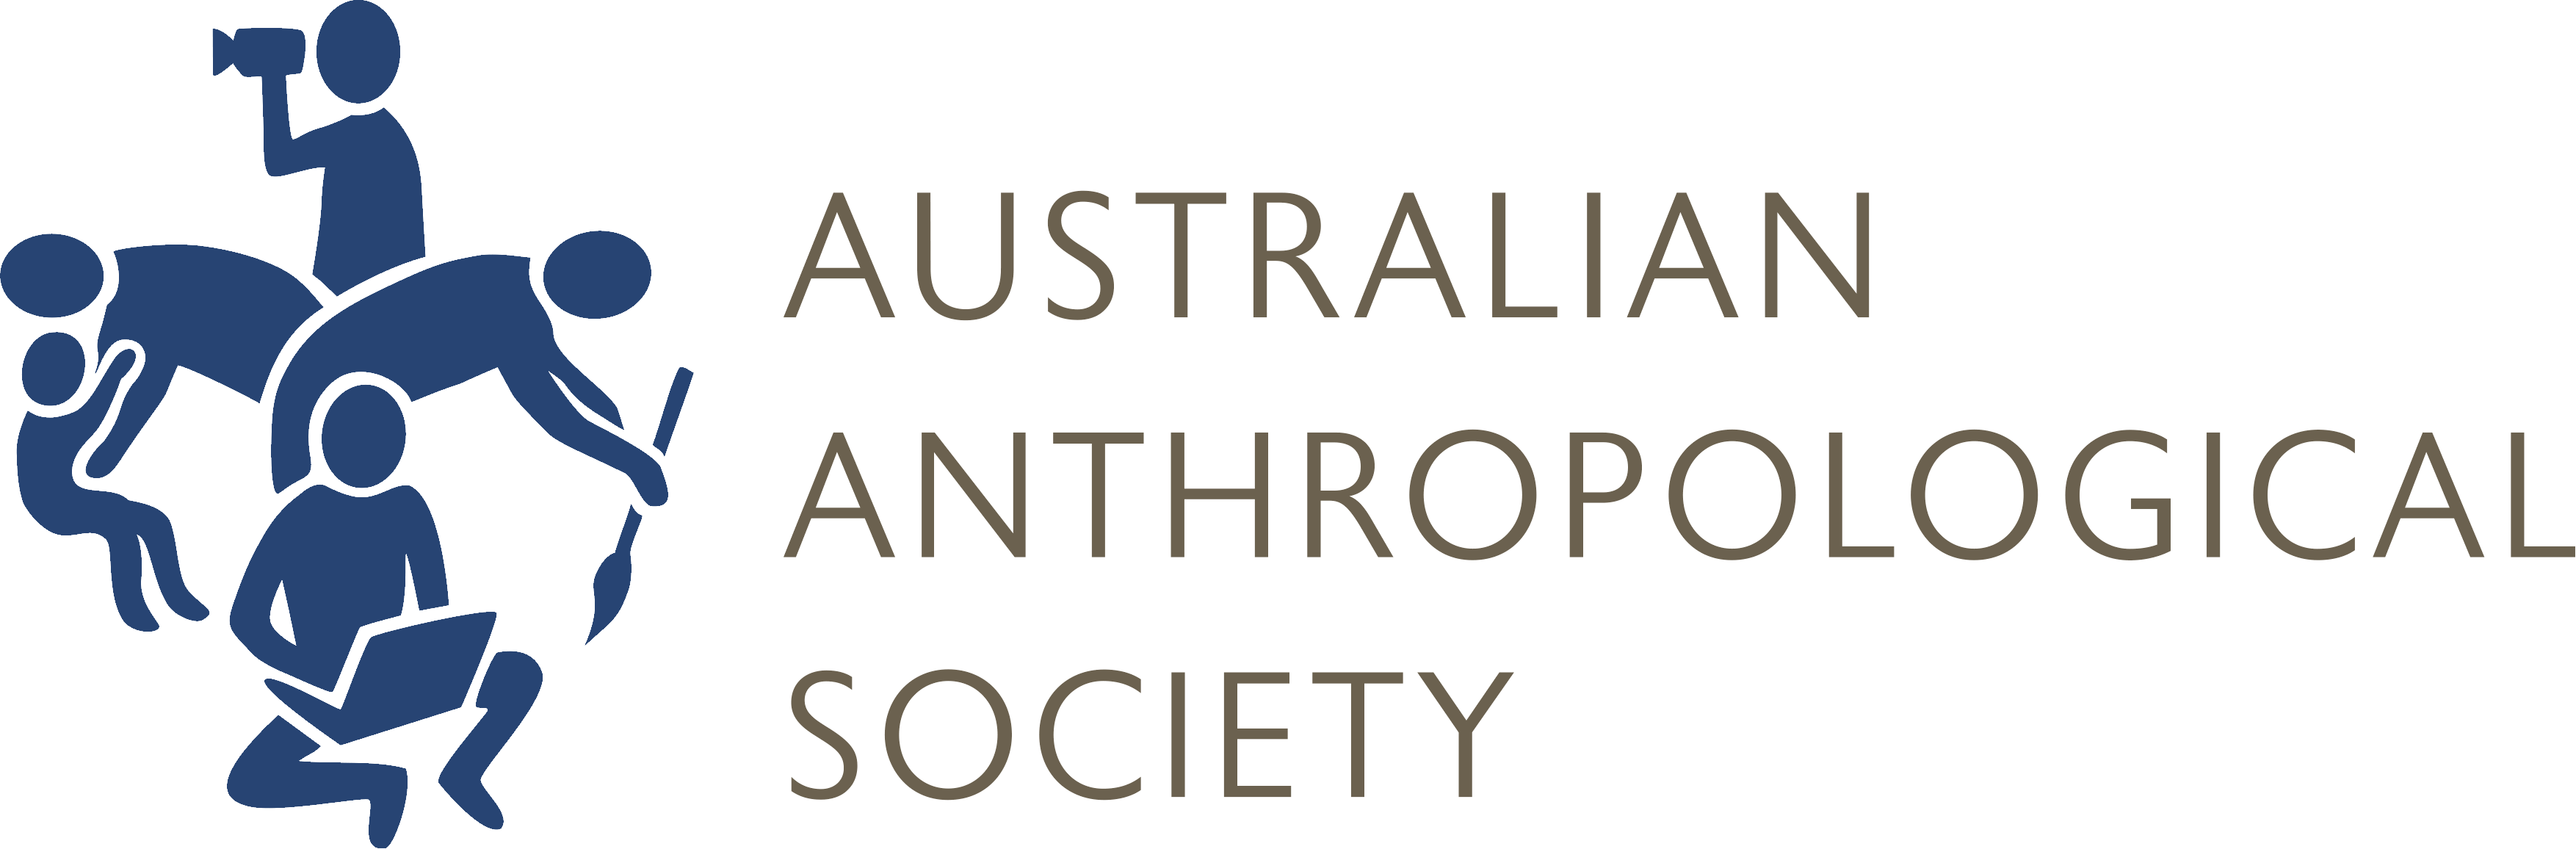 Australian Anthropological Society (AAS)